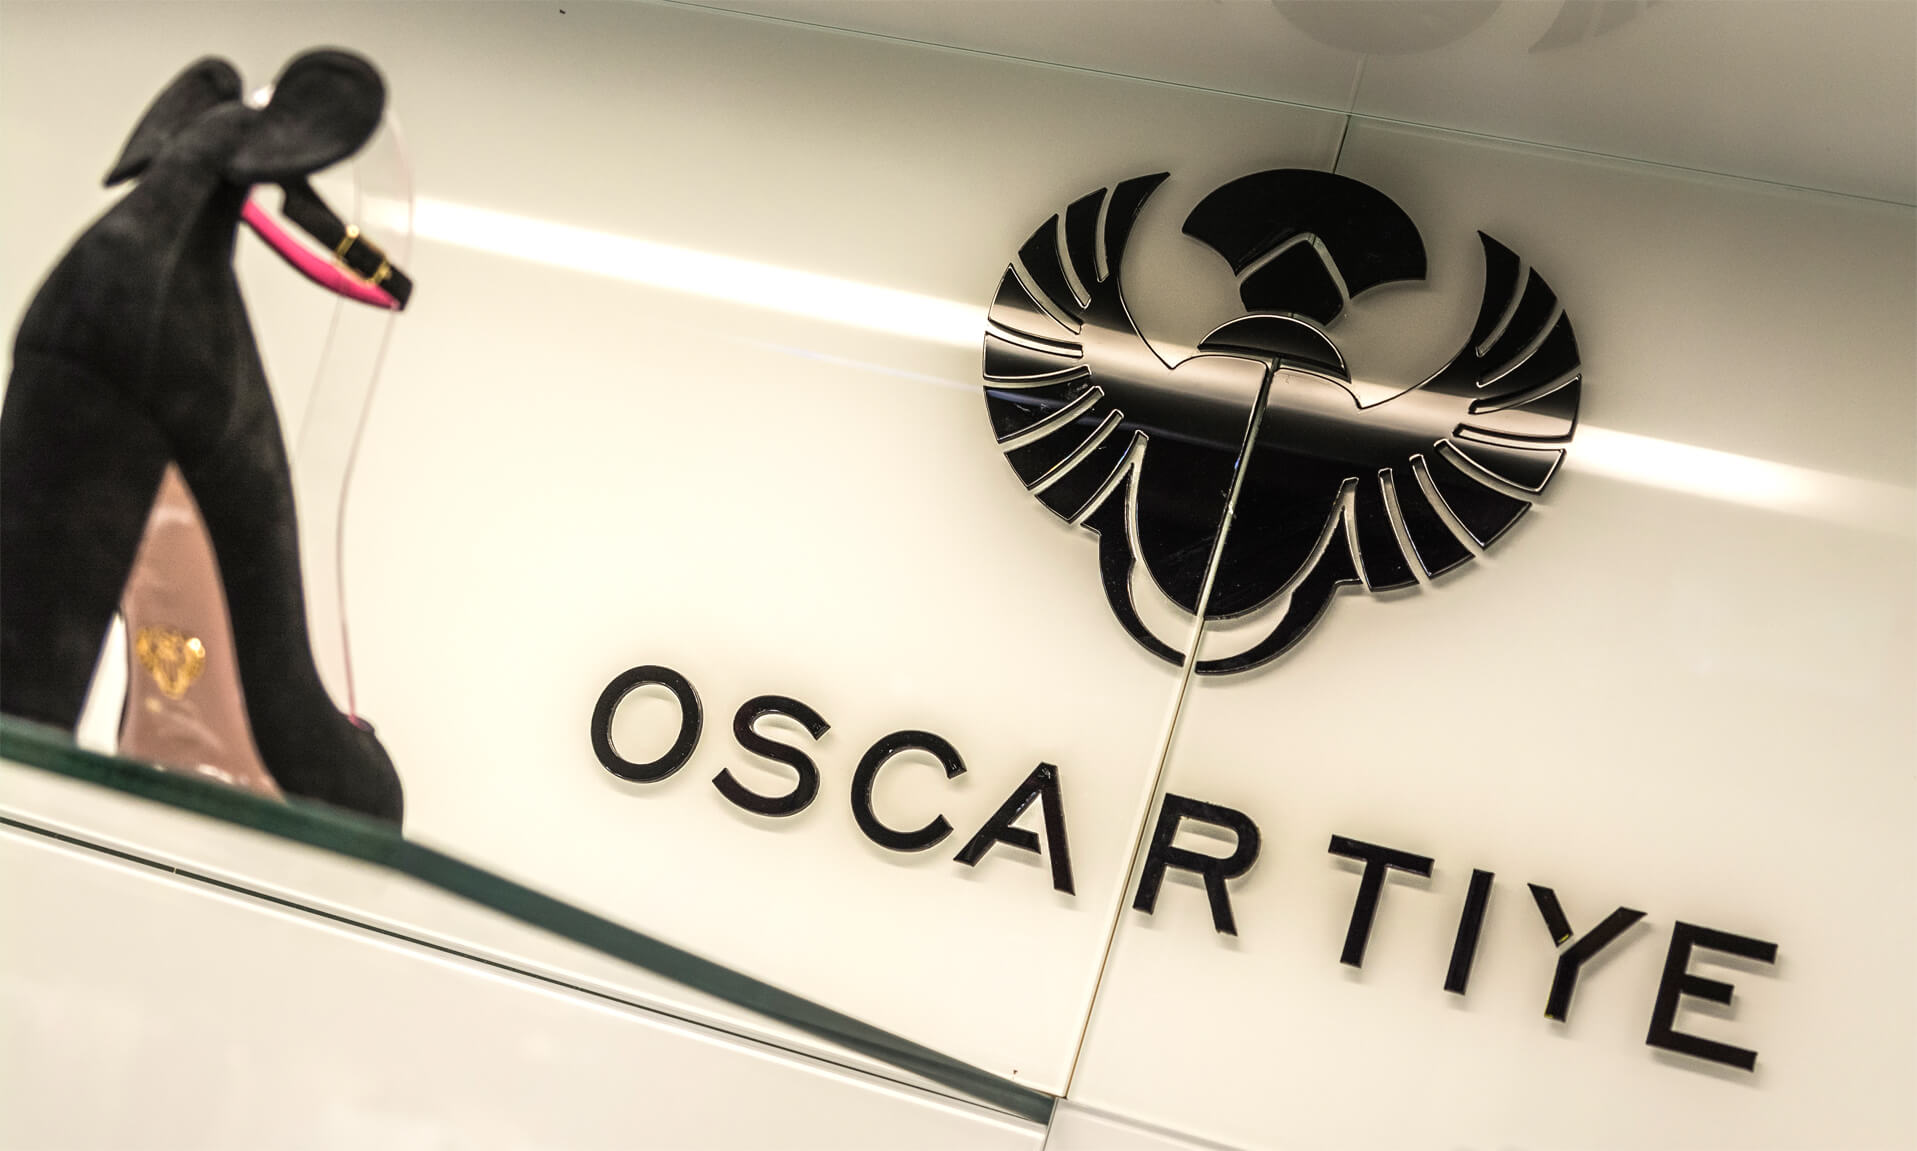 Oscartye - Oscar Tiye - Logo und 3D-Buchstaben aus Acryl in schwarzer Farbe